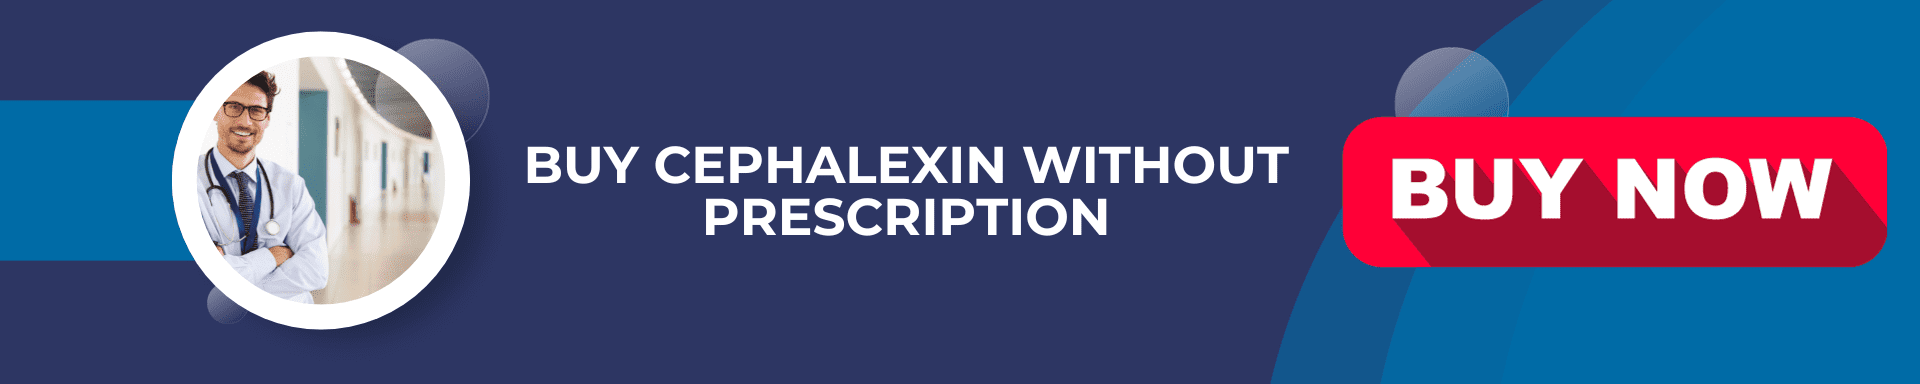 Achetez Cephalexin en ligne